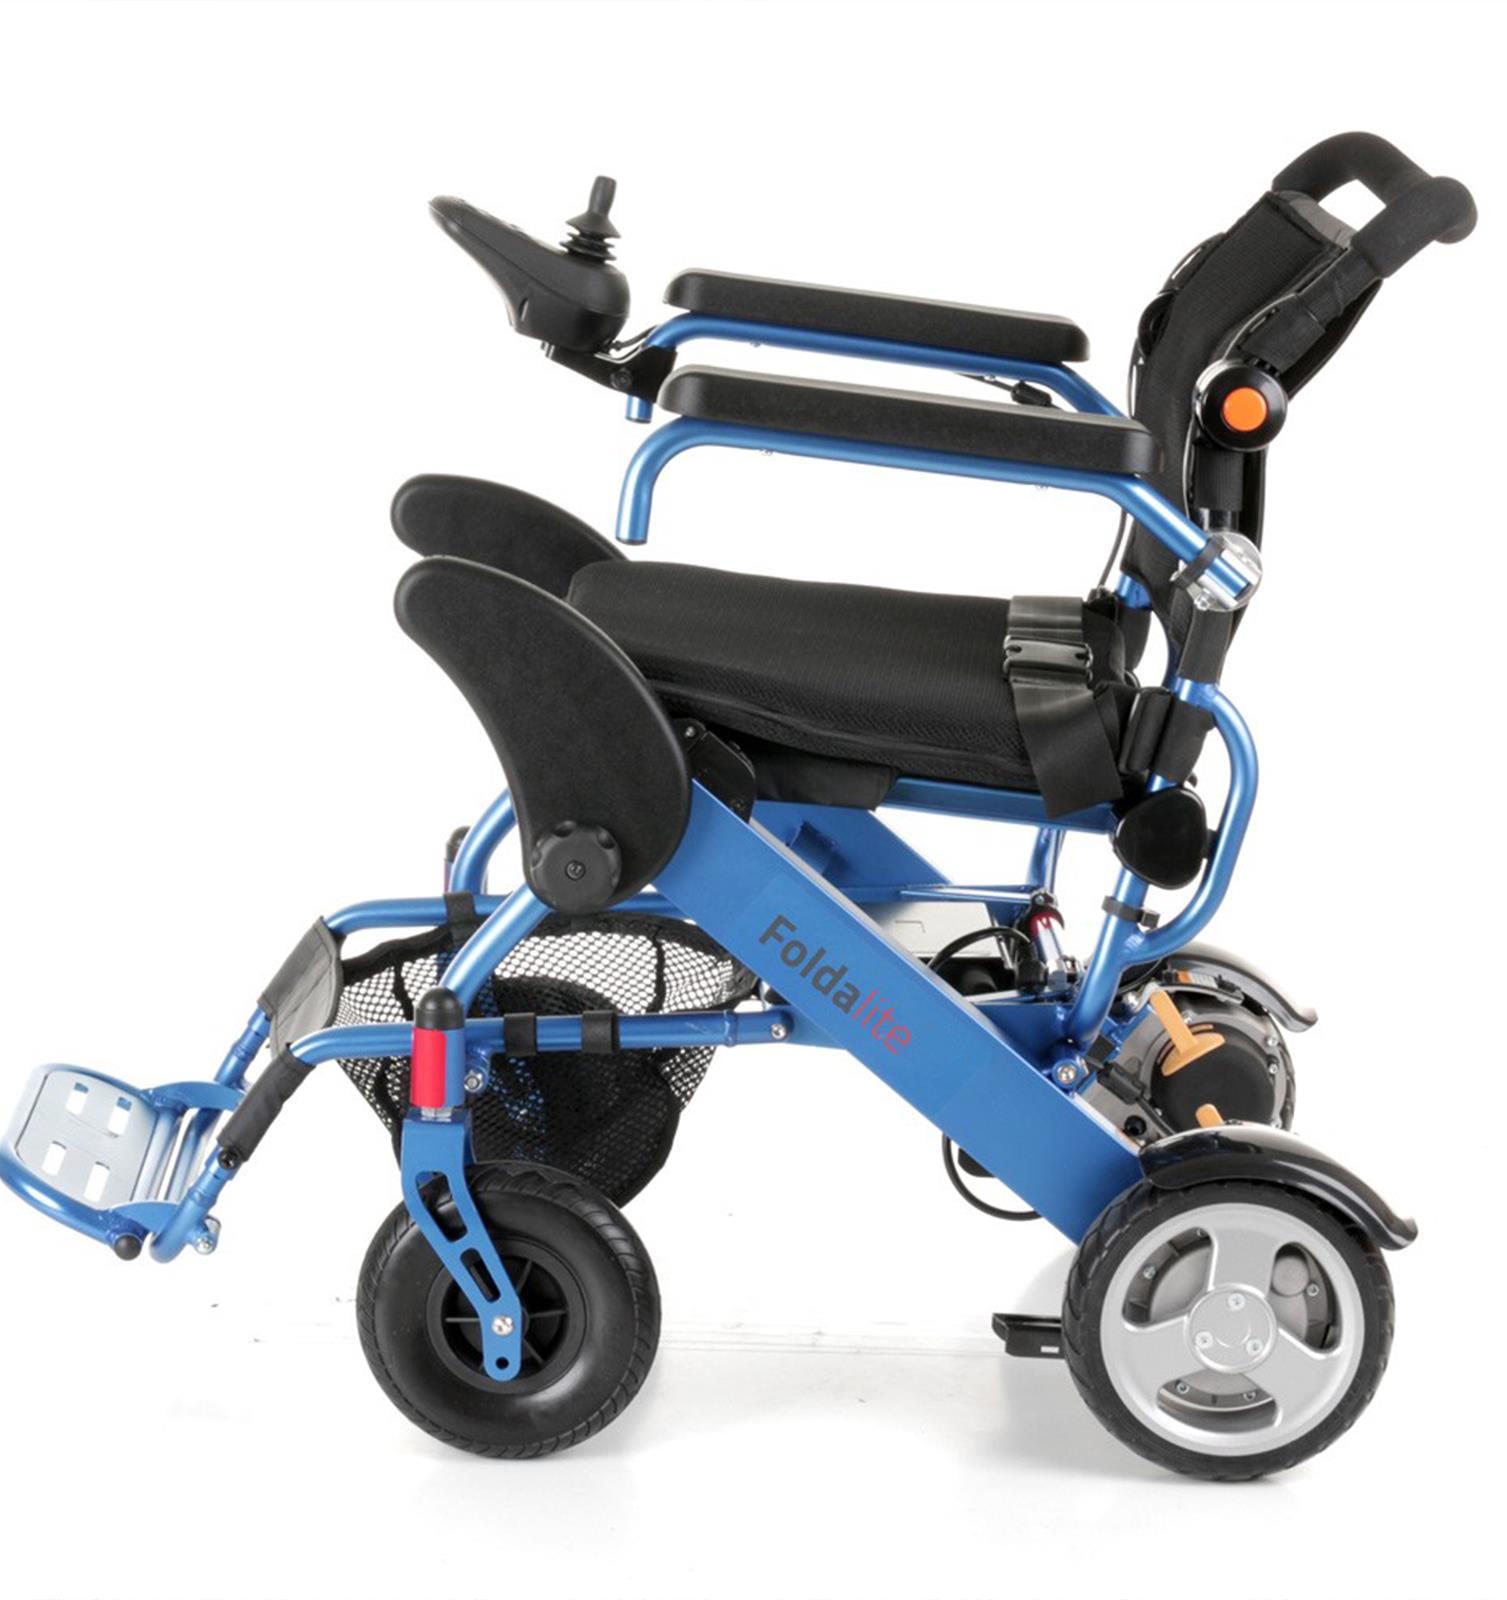 MH, Foldalite Electric Wheelchair